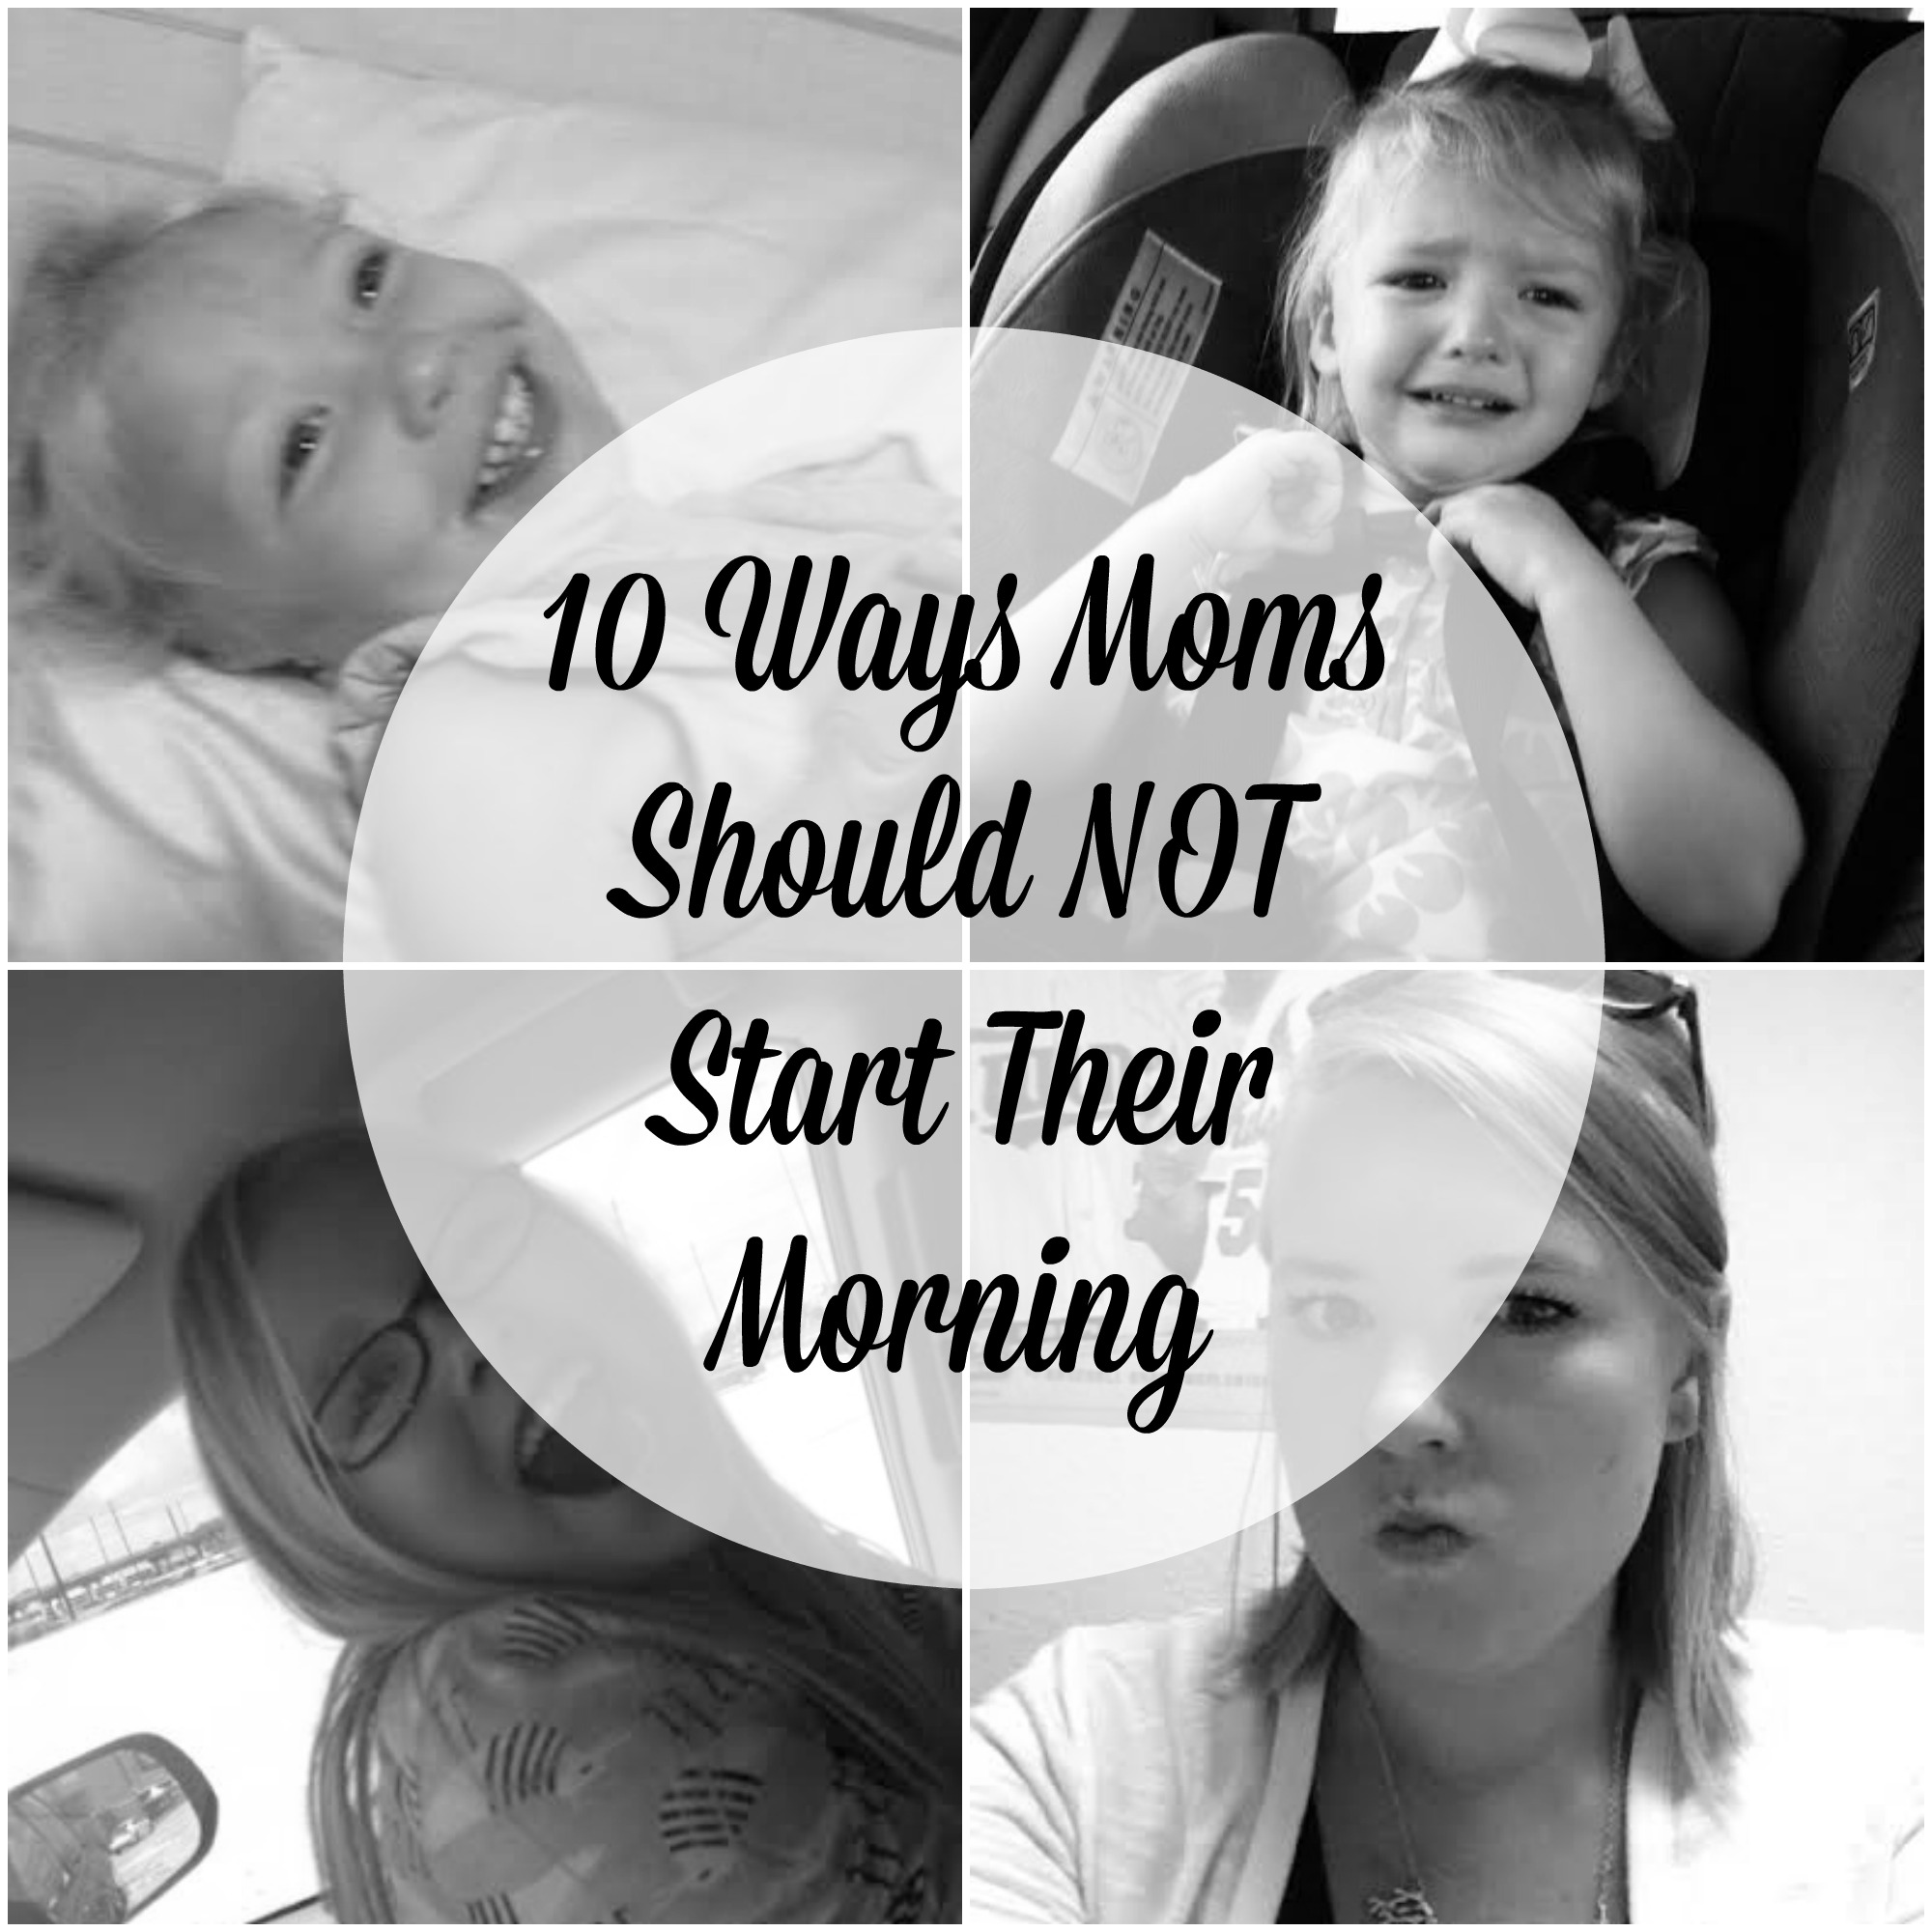 10 Ways Moms Should NOT Start Their Morning